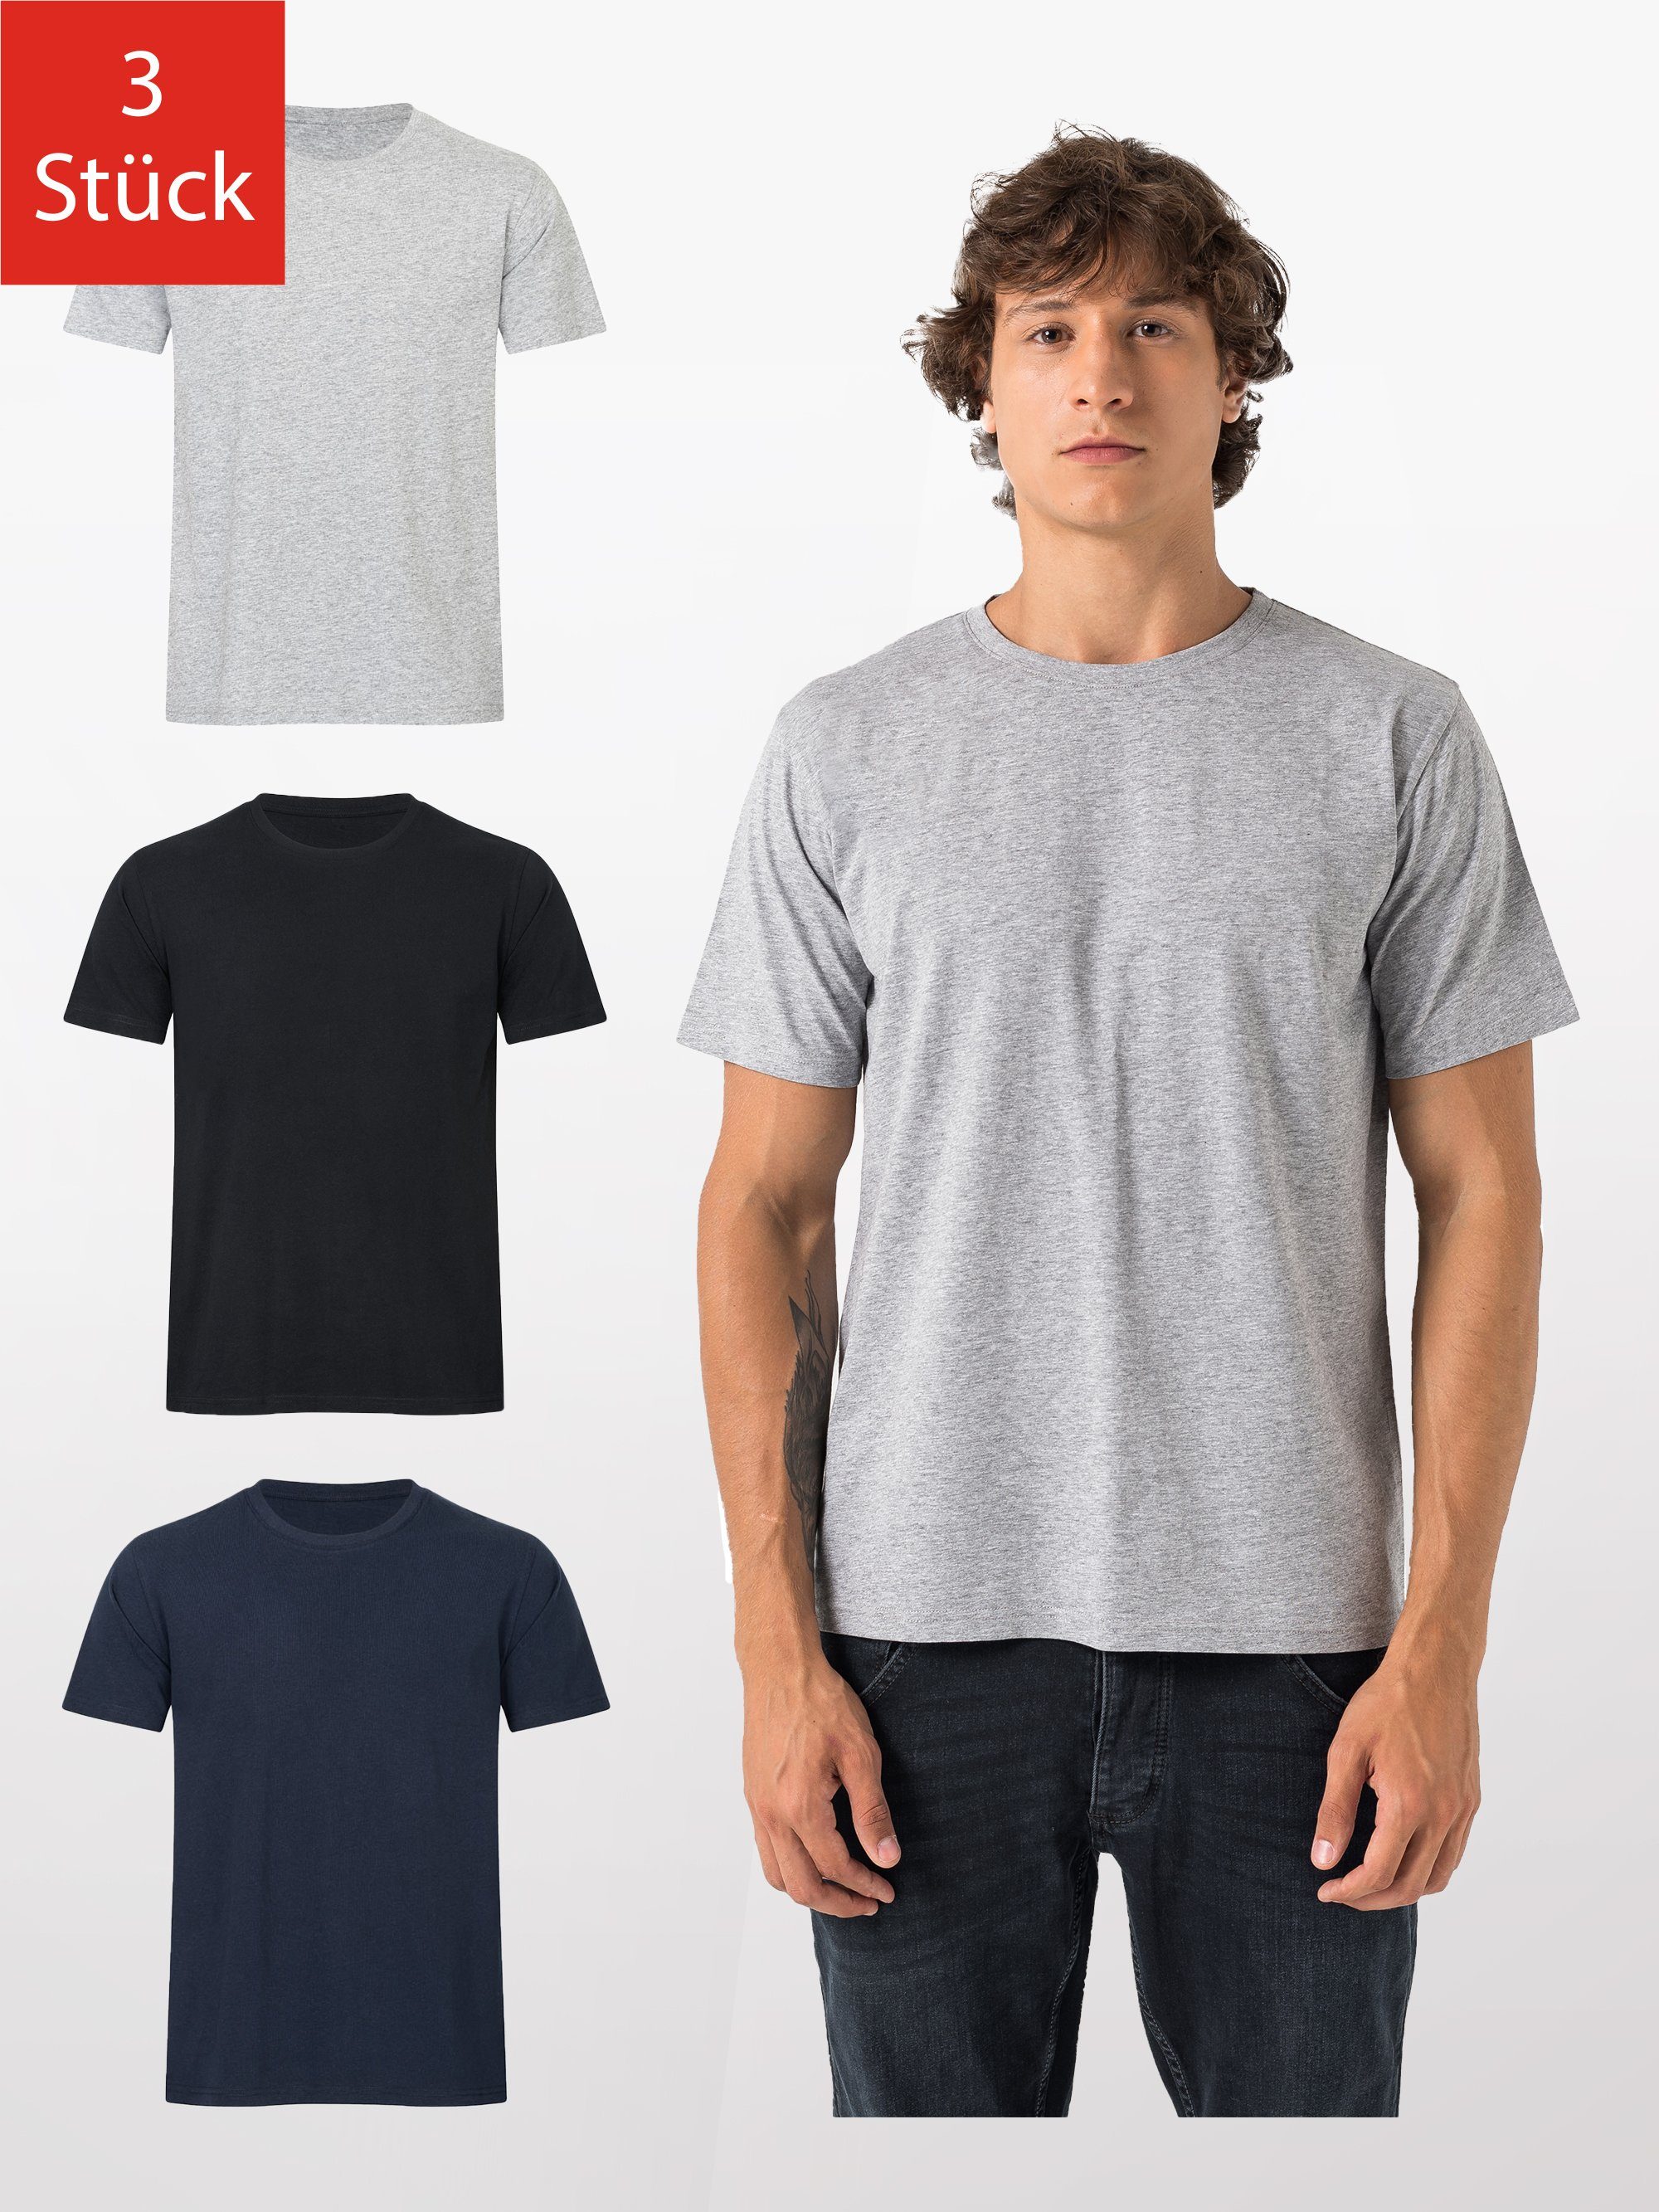 & Fit 1x Männer Unifarbe Schwarz Basic 3er-Pack) Blau 1x Regular T-Shirt Son Set + in Baumwolle 100% Burnell Grau 1x aus (Packung, Herren (S-5XL) + Tshirt 3-tlg.,